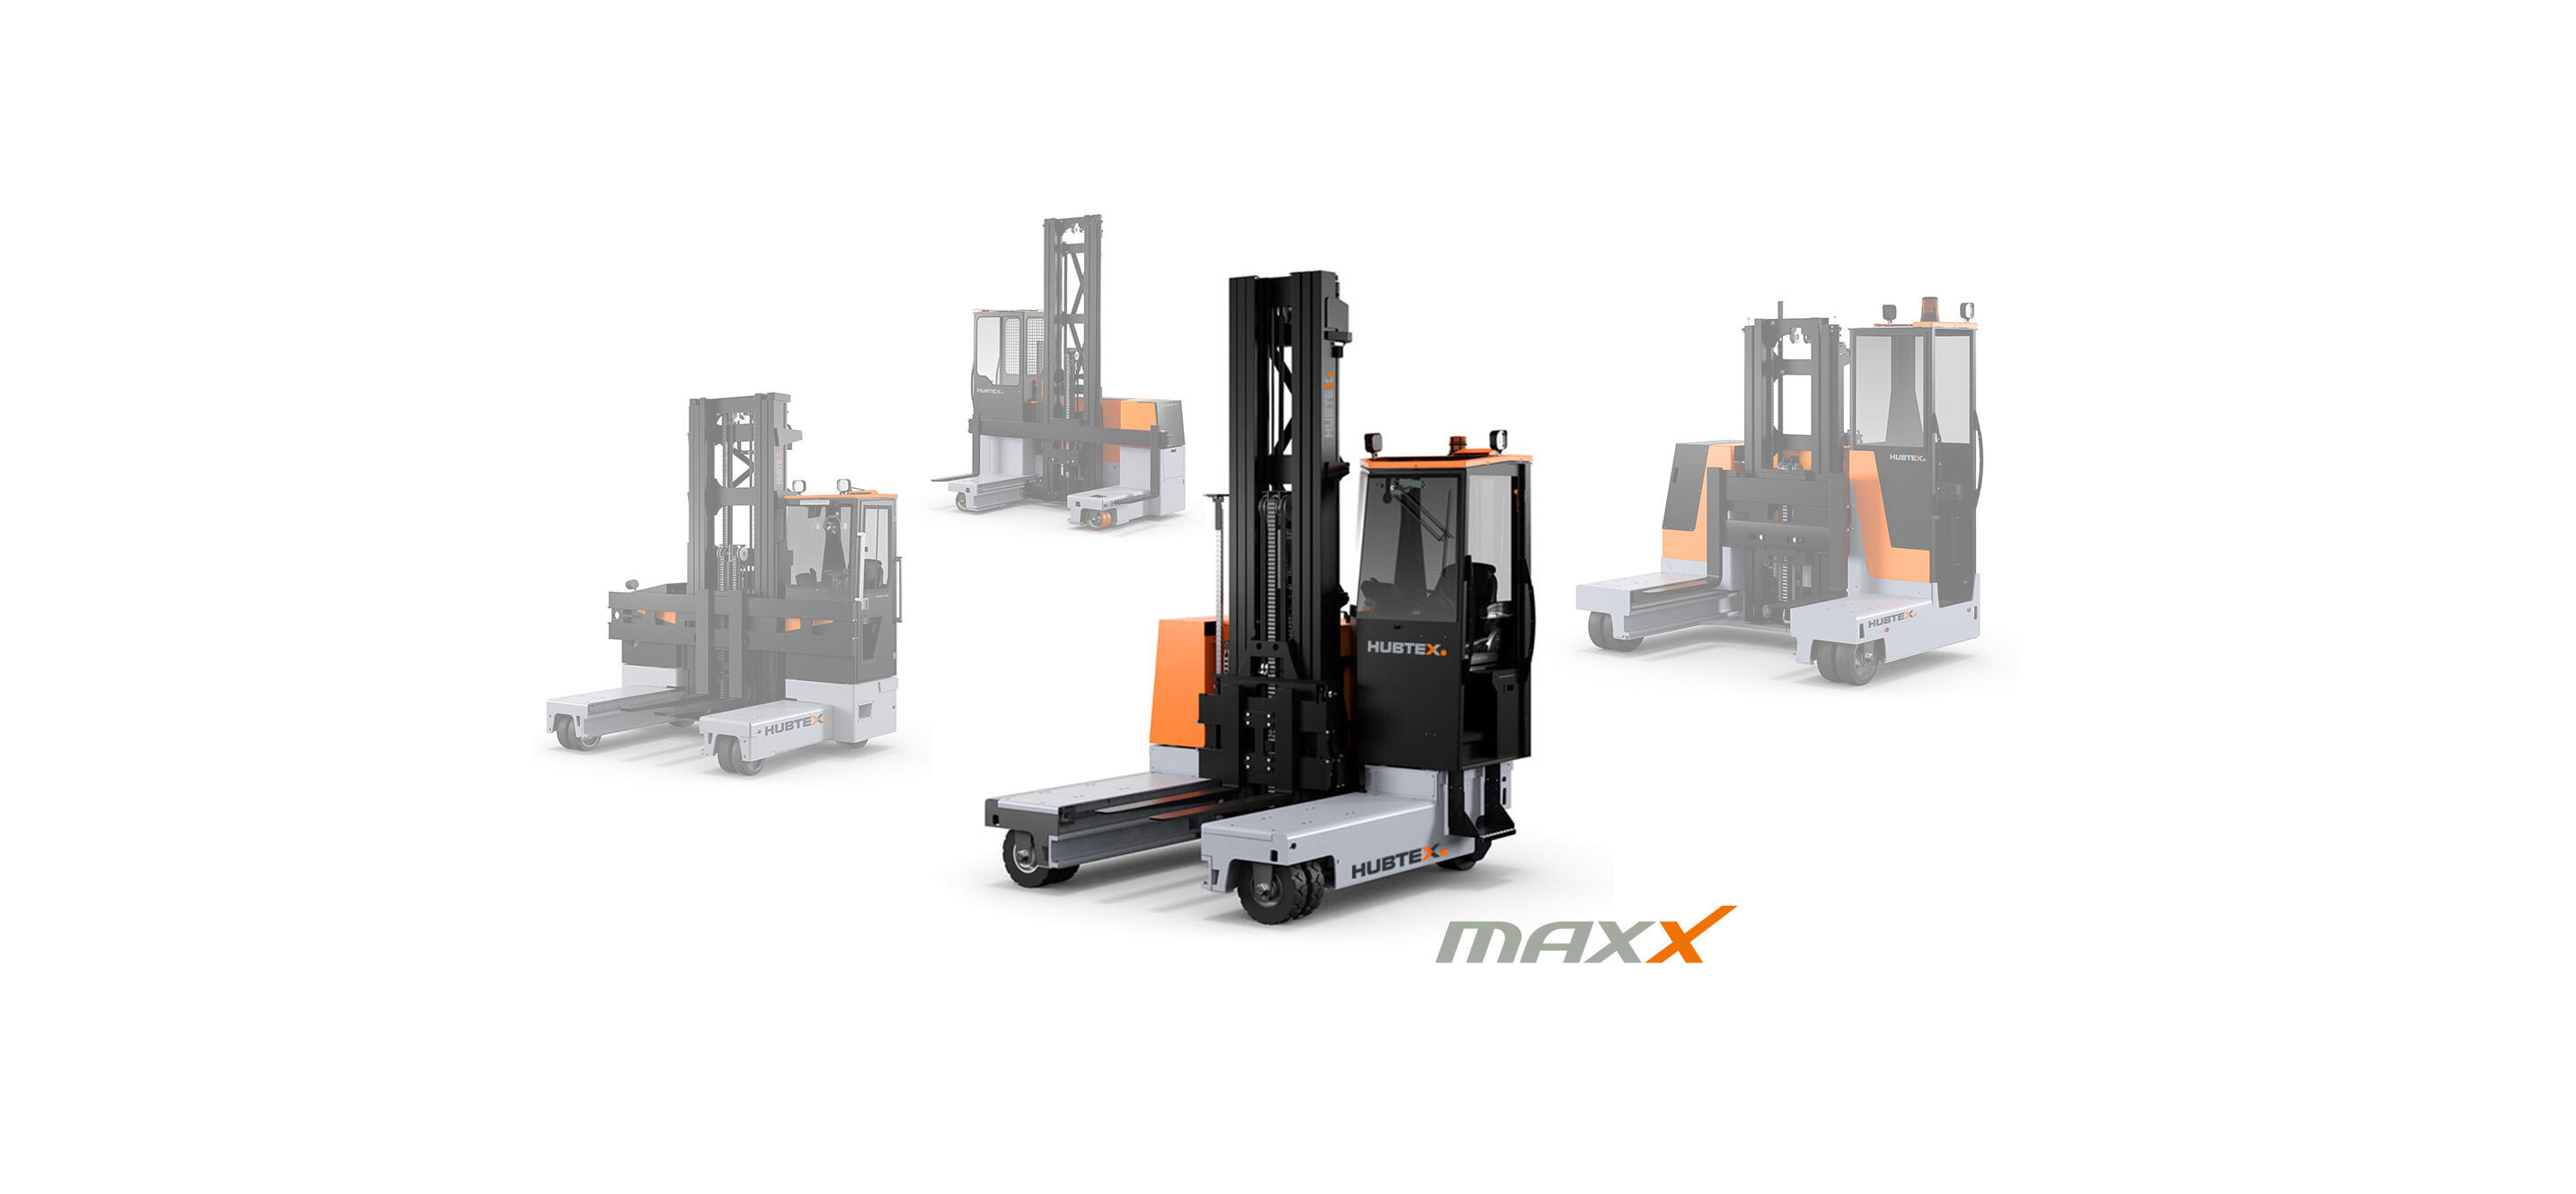 Maxx Mehrwegestapler Hubtex